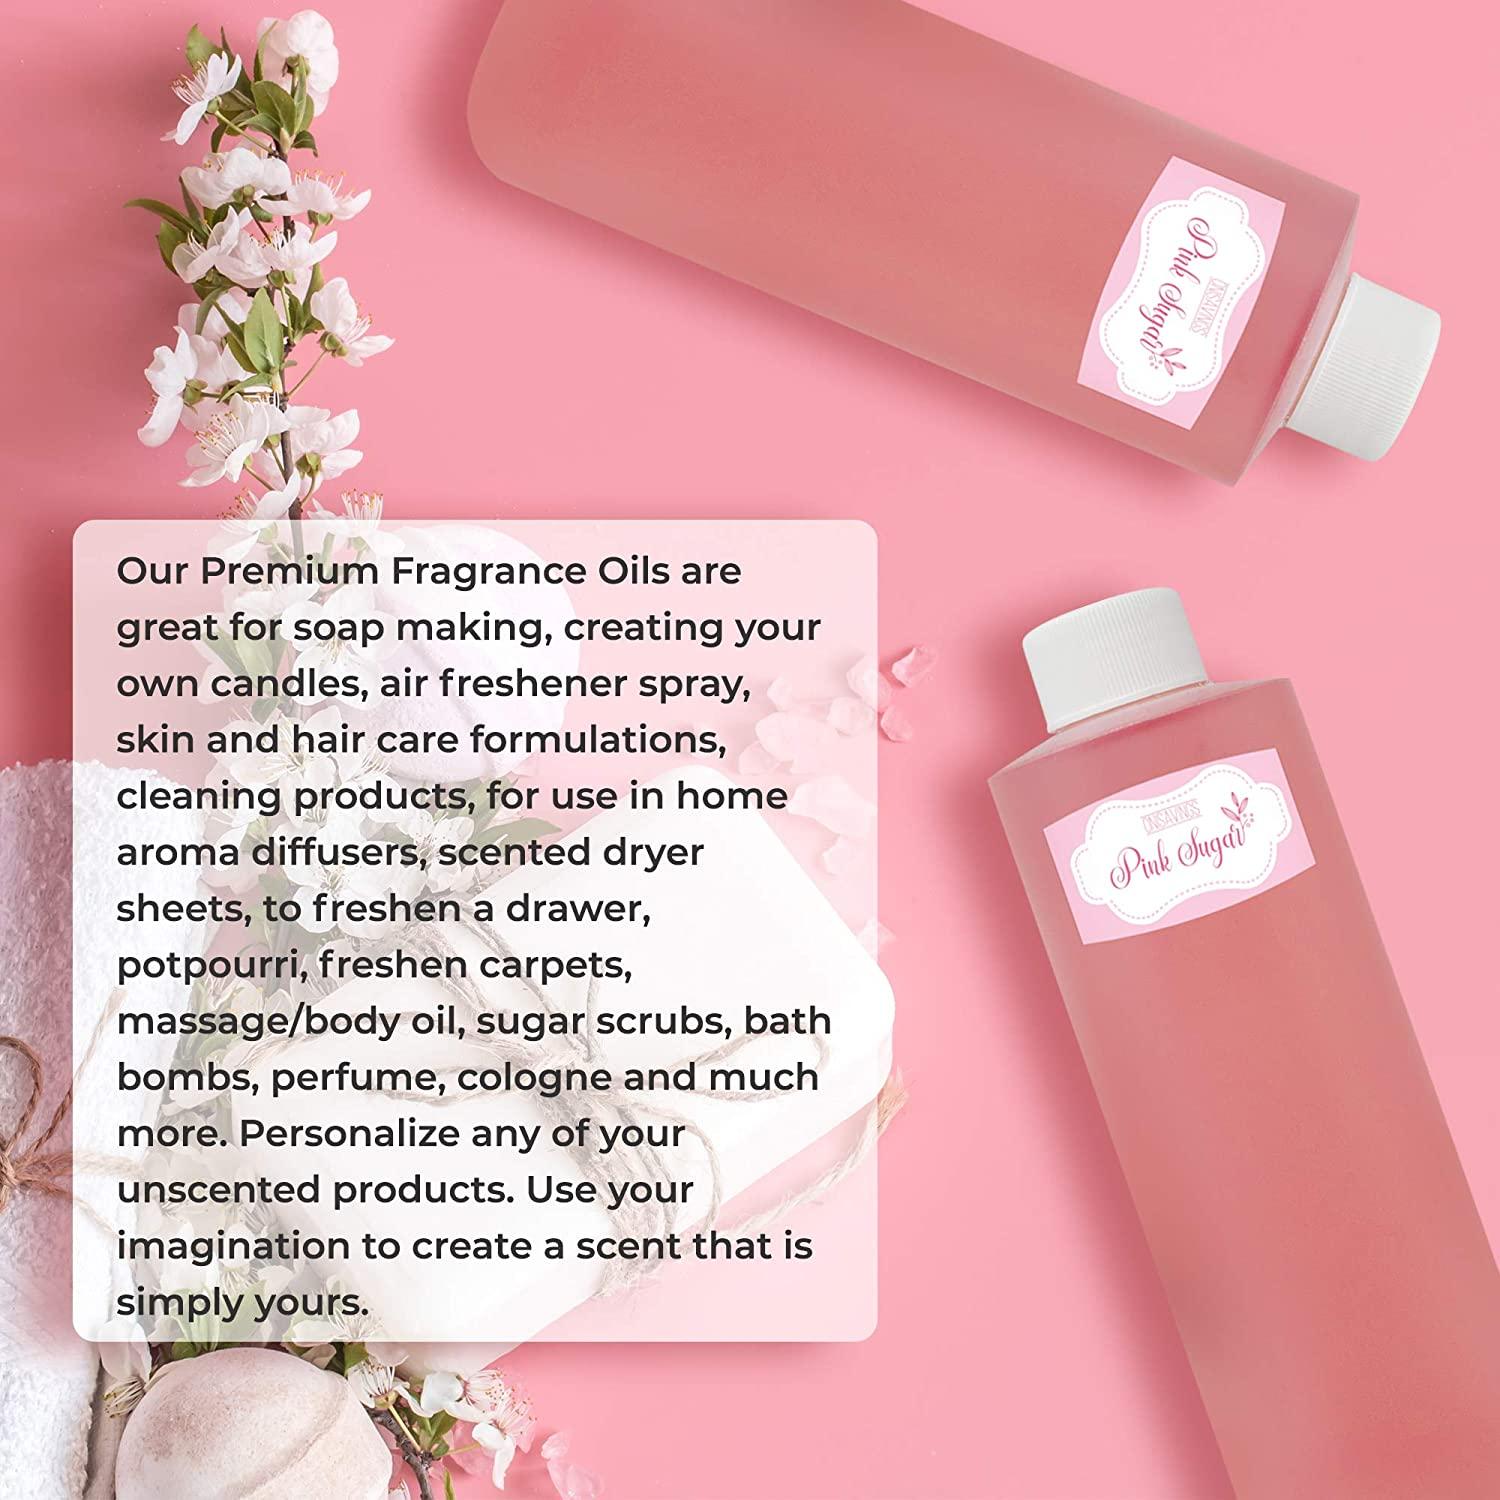 Pink Sugar Fragrance Body Long Lasting Body Oils (Best Fragrances  Affordable Alternative Generic Version) Set of 3 10.35 ml Roll-on